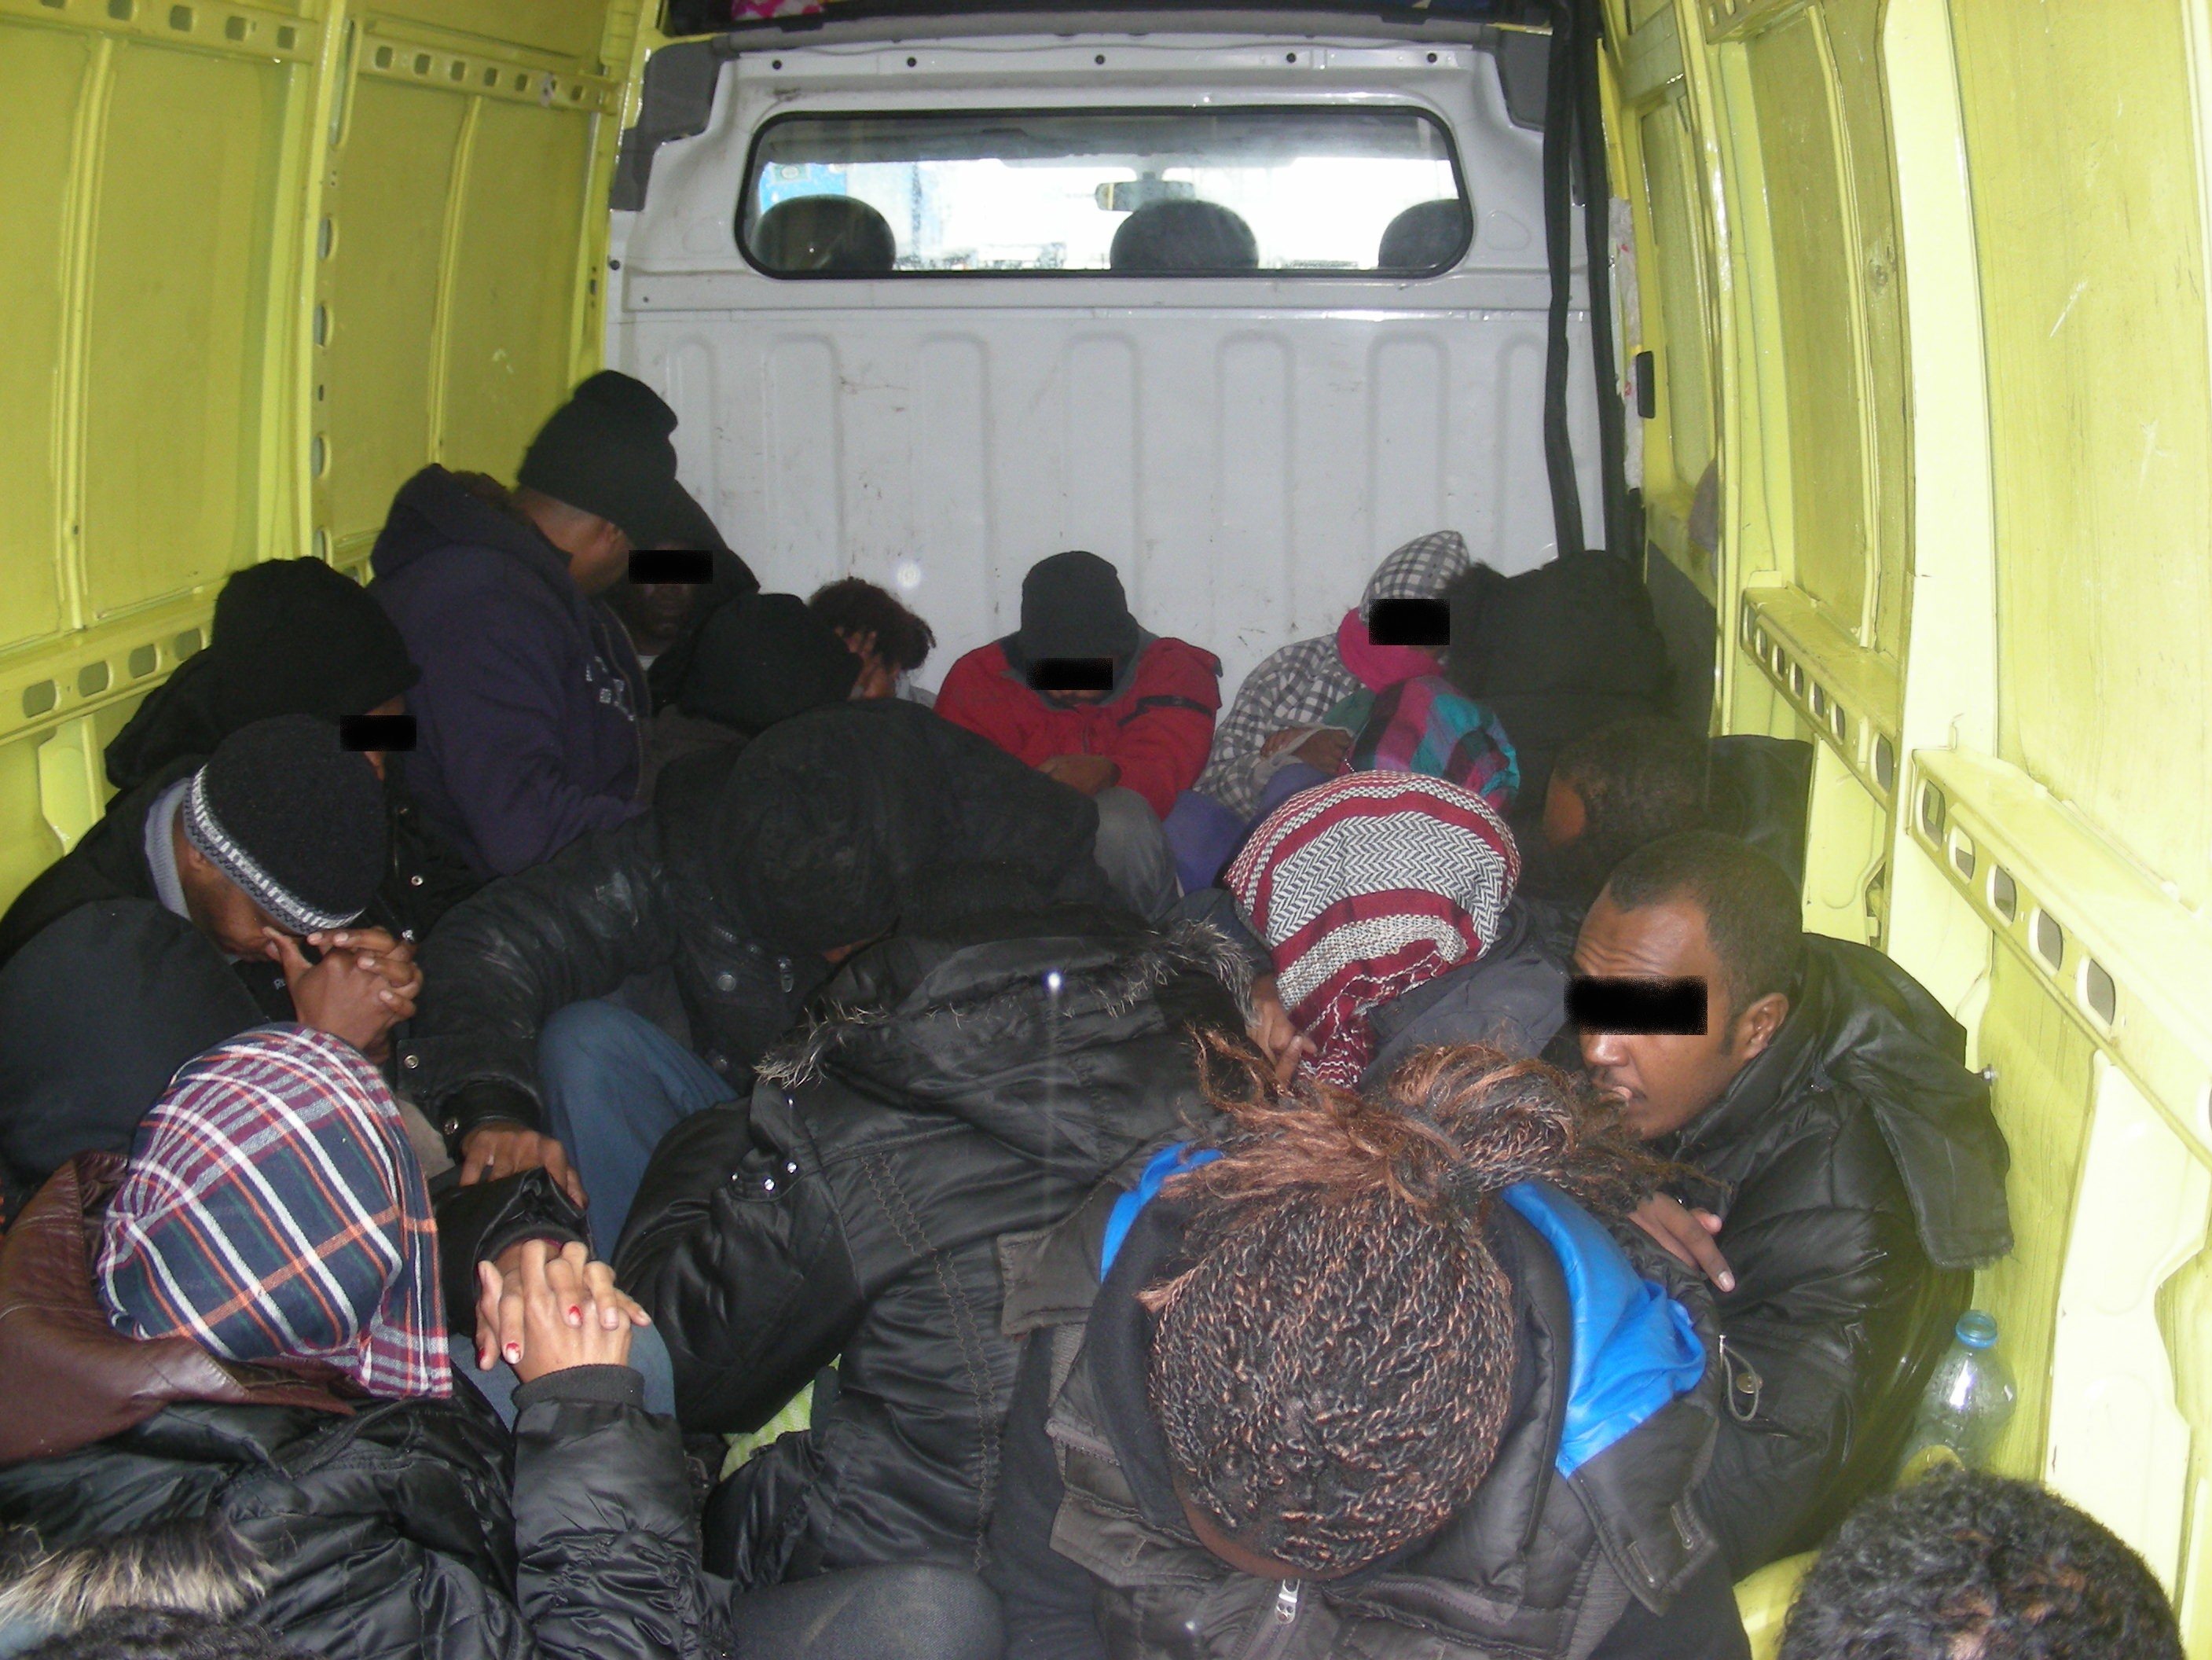  Državljana Srbije sta v kombiniranem vozilu tihotapila 22 tujcev